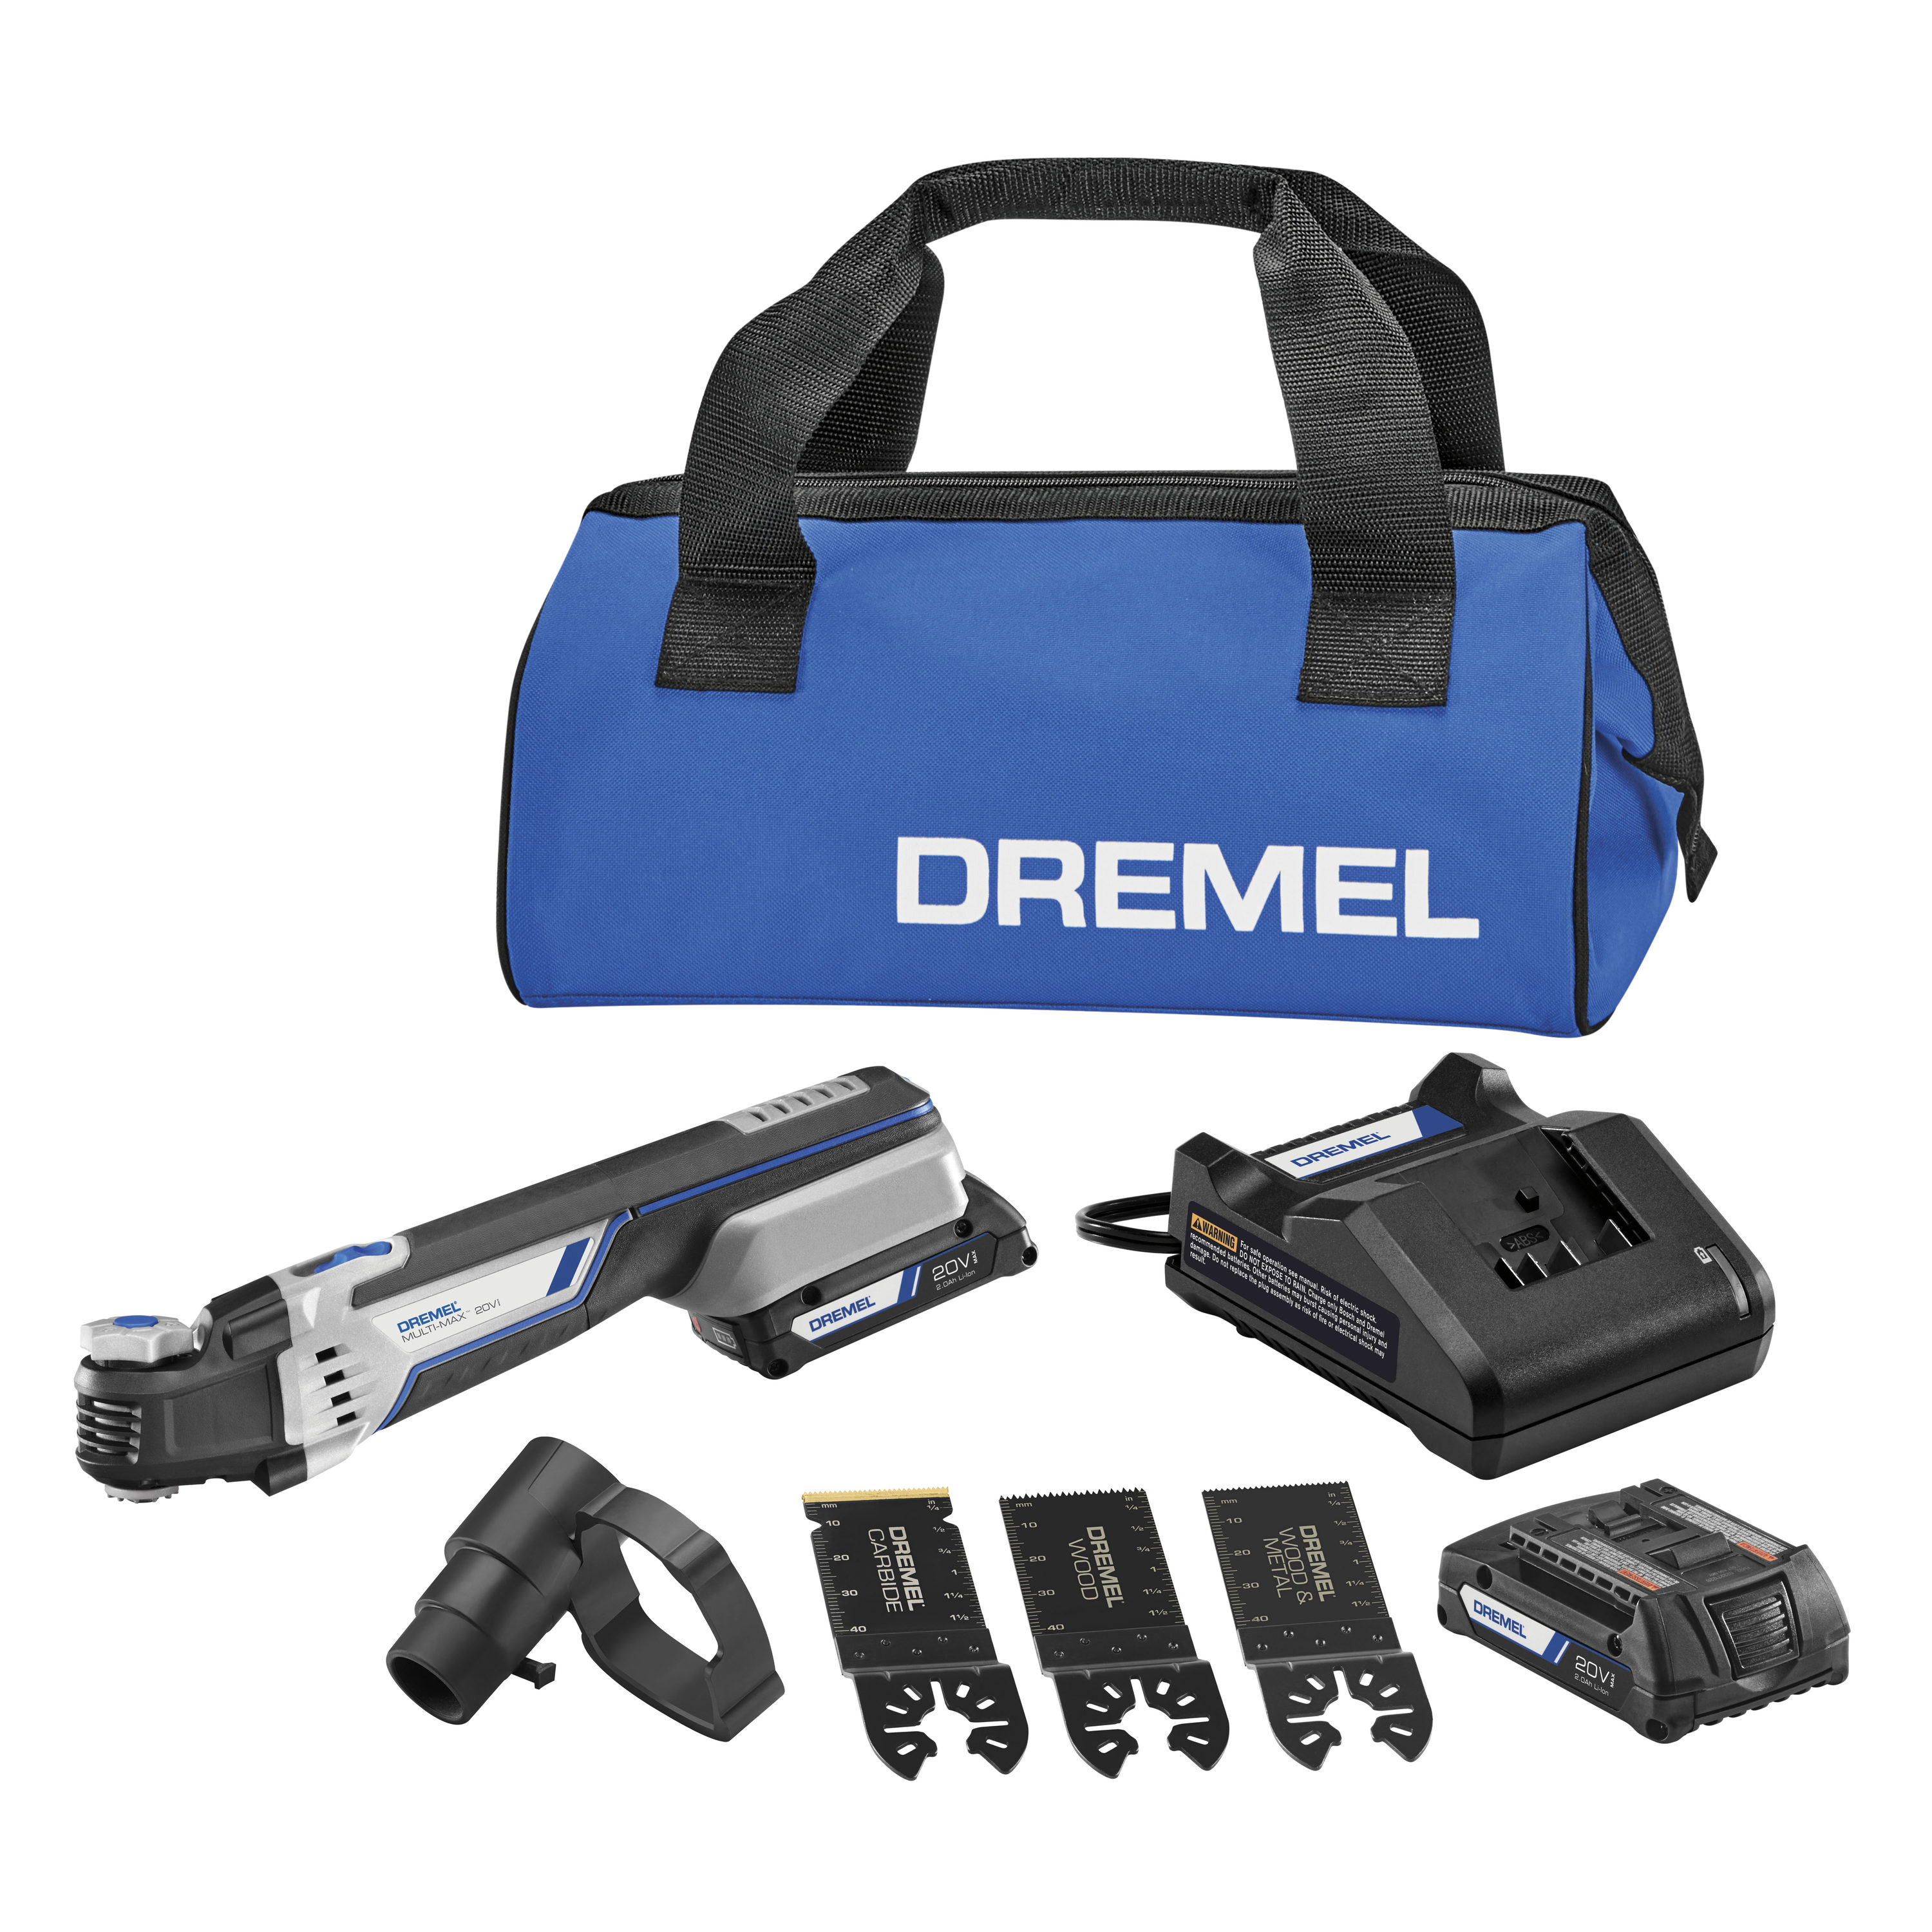 Dremel Multi-Max 6300 Oscillating Tool Kit Review